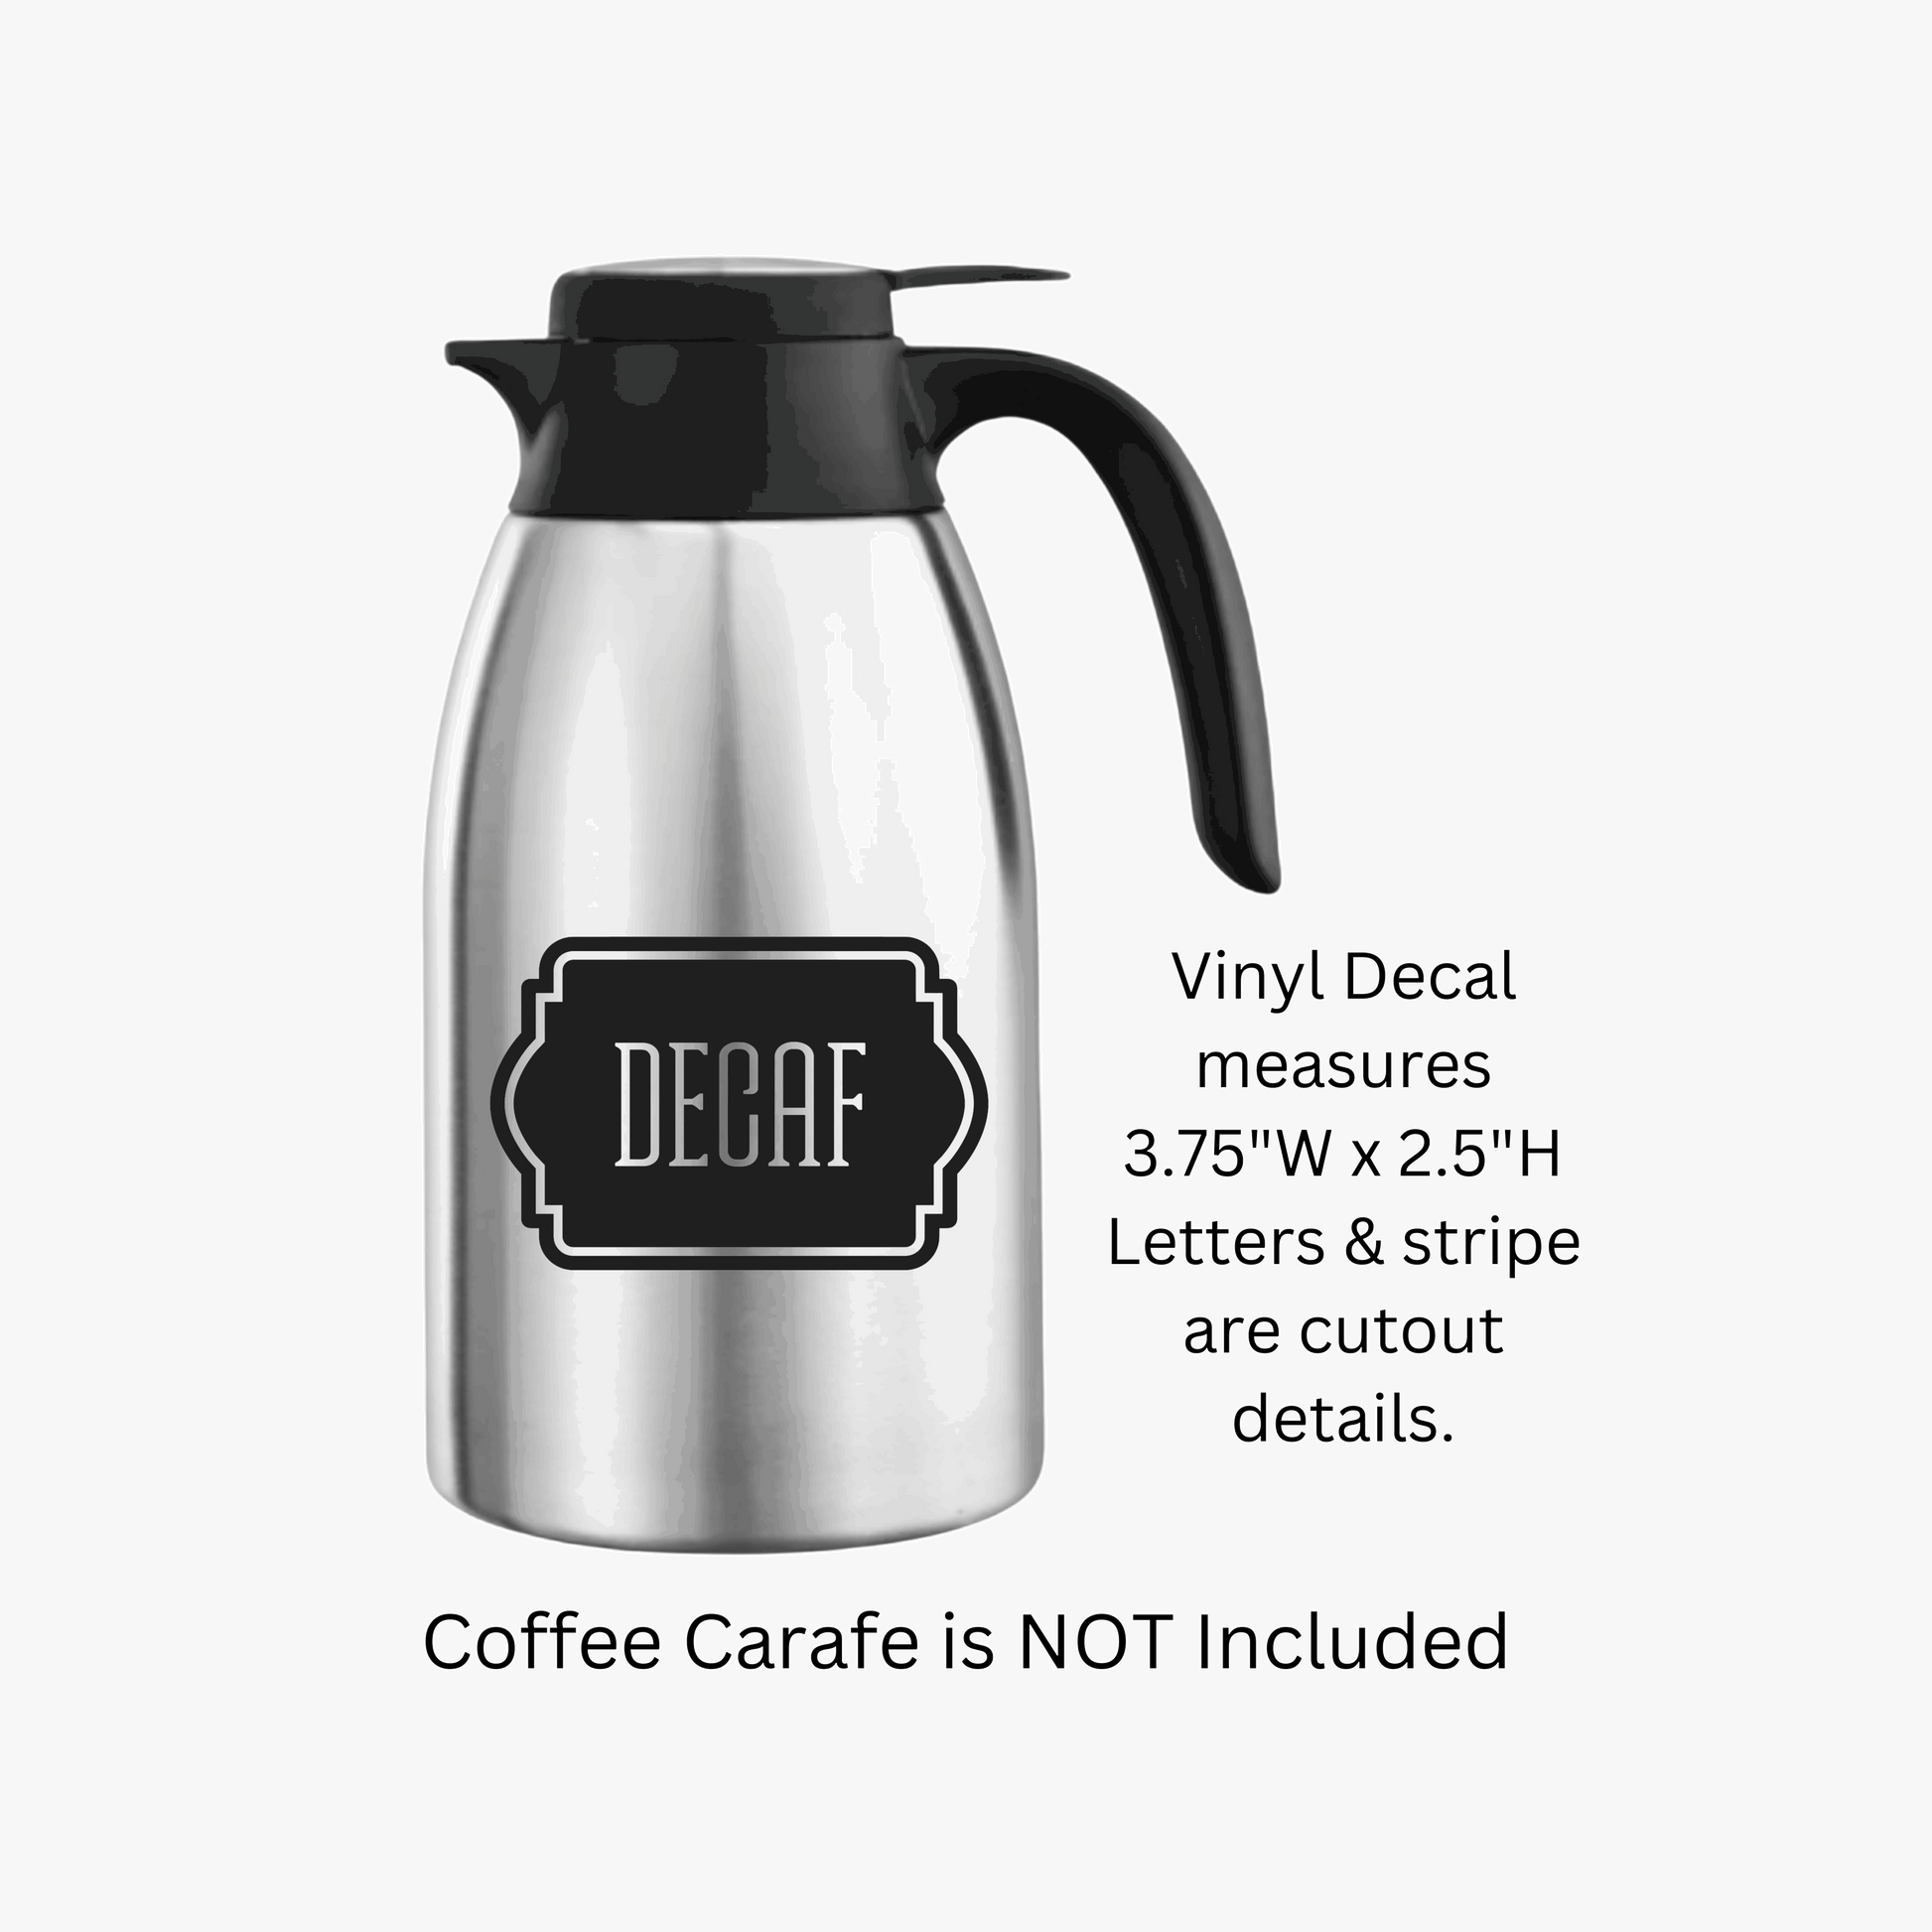 Decaf Coffee Decal